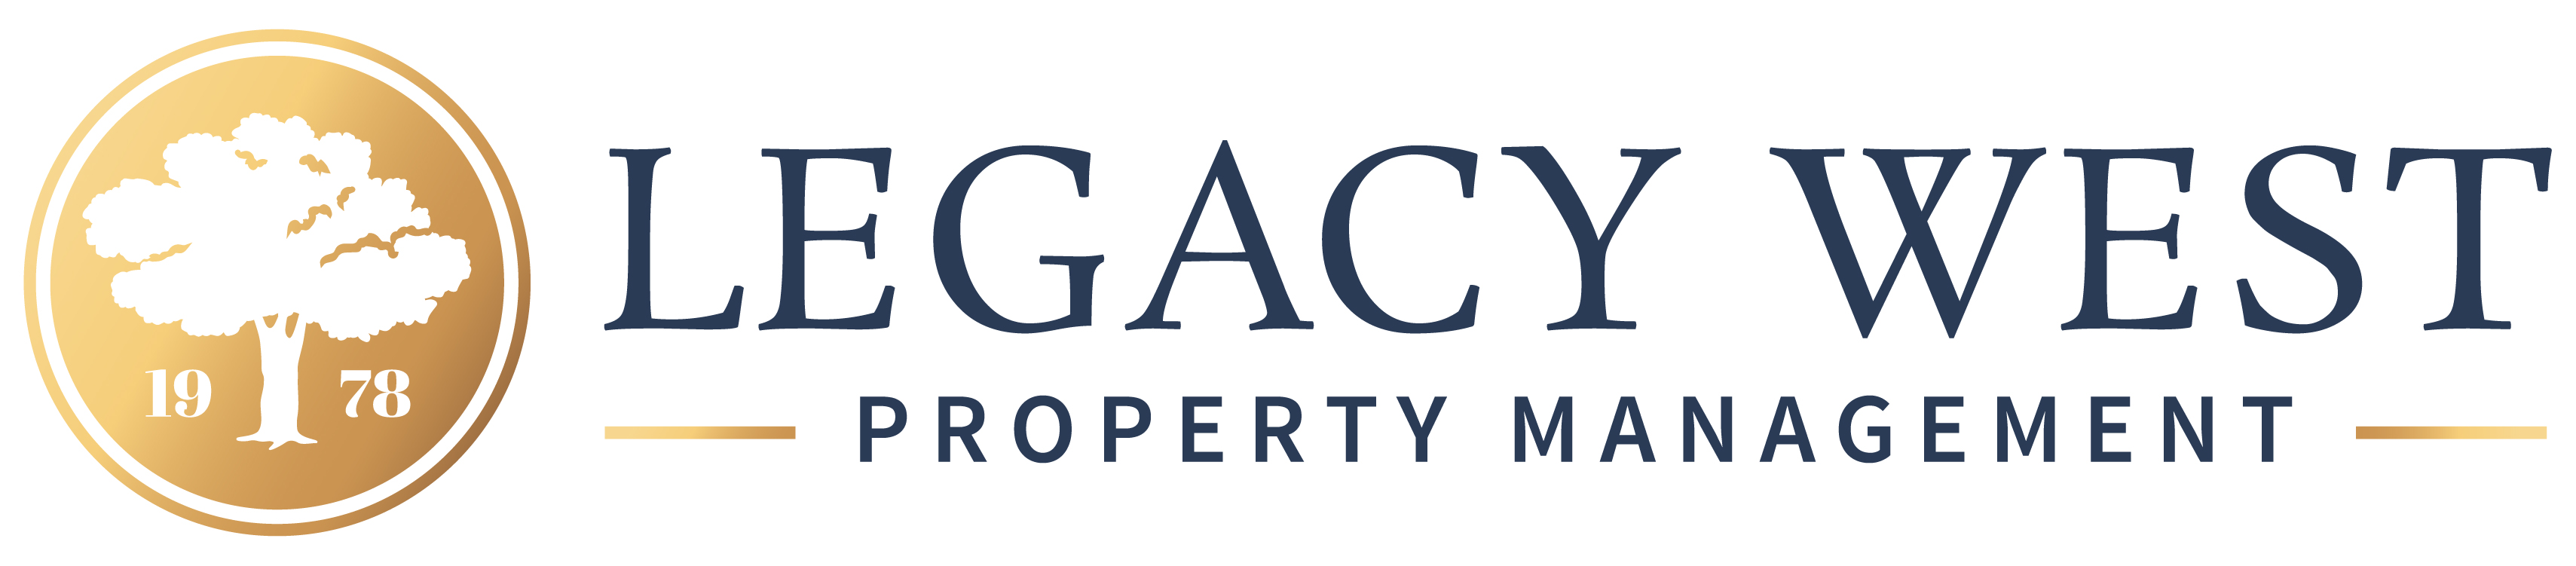 Legacy West Property Management